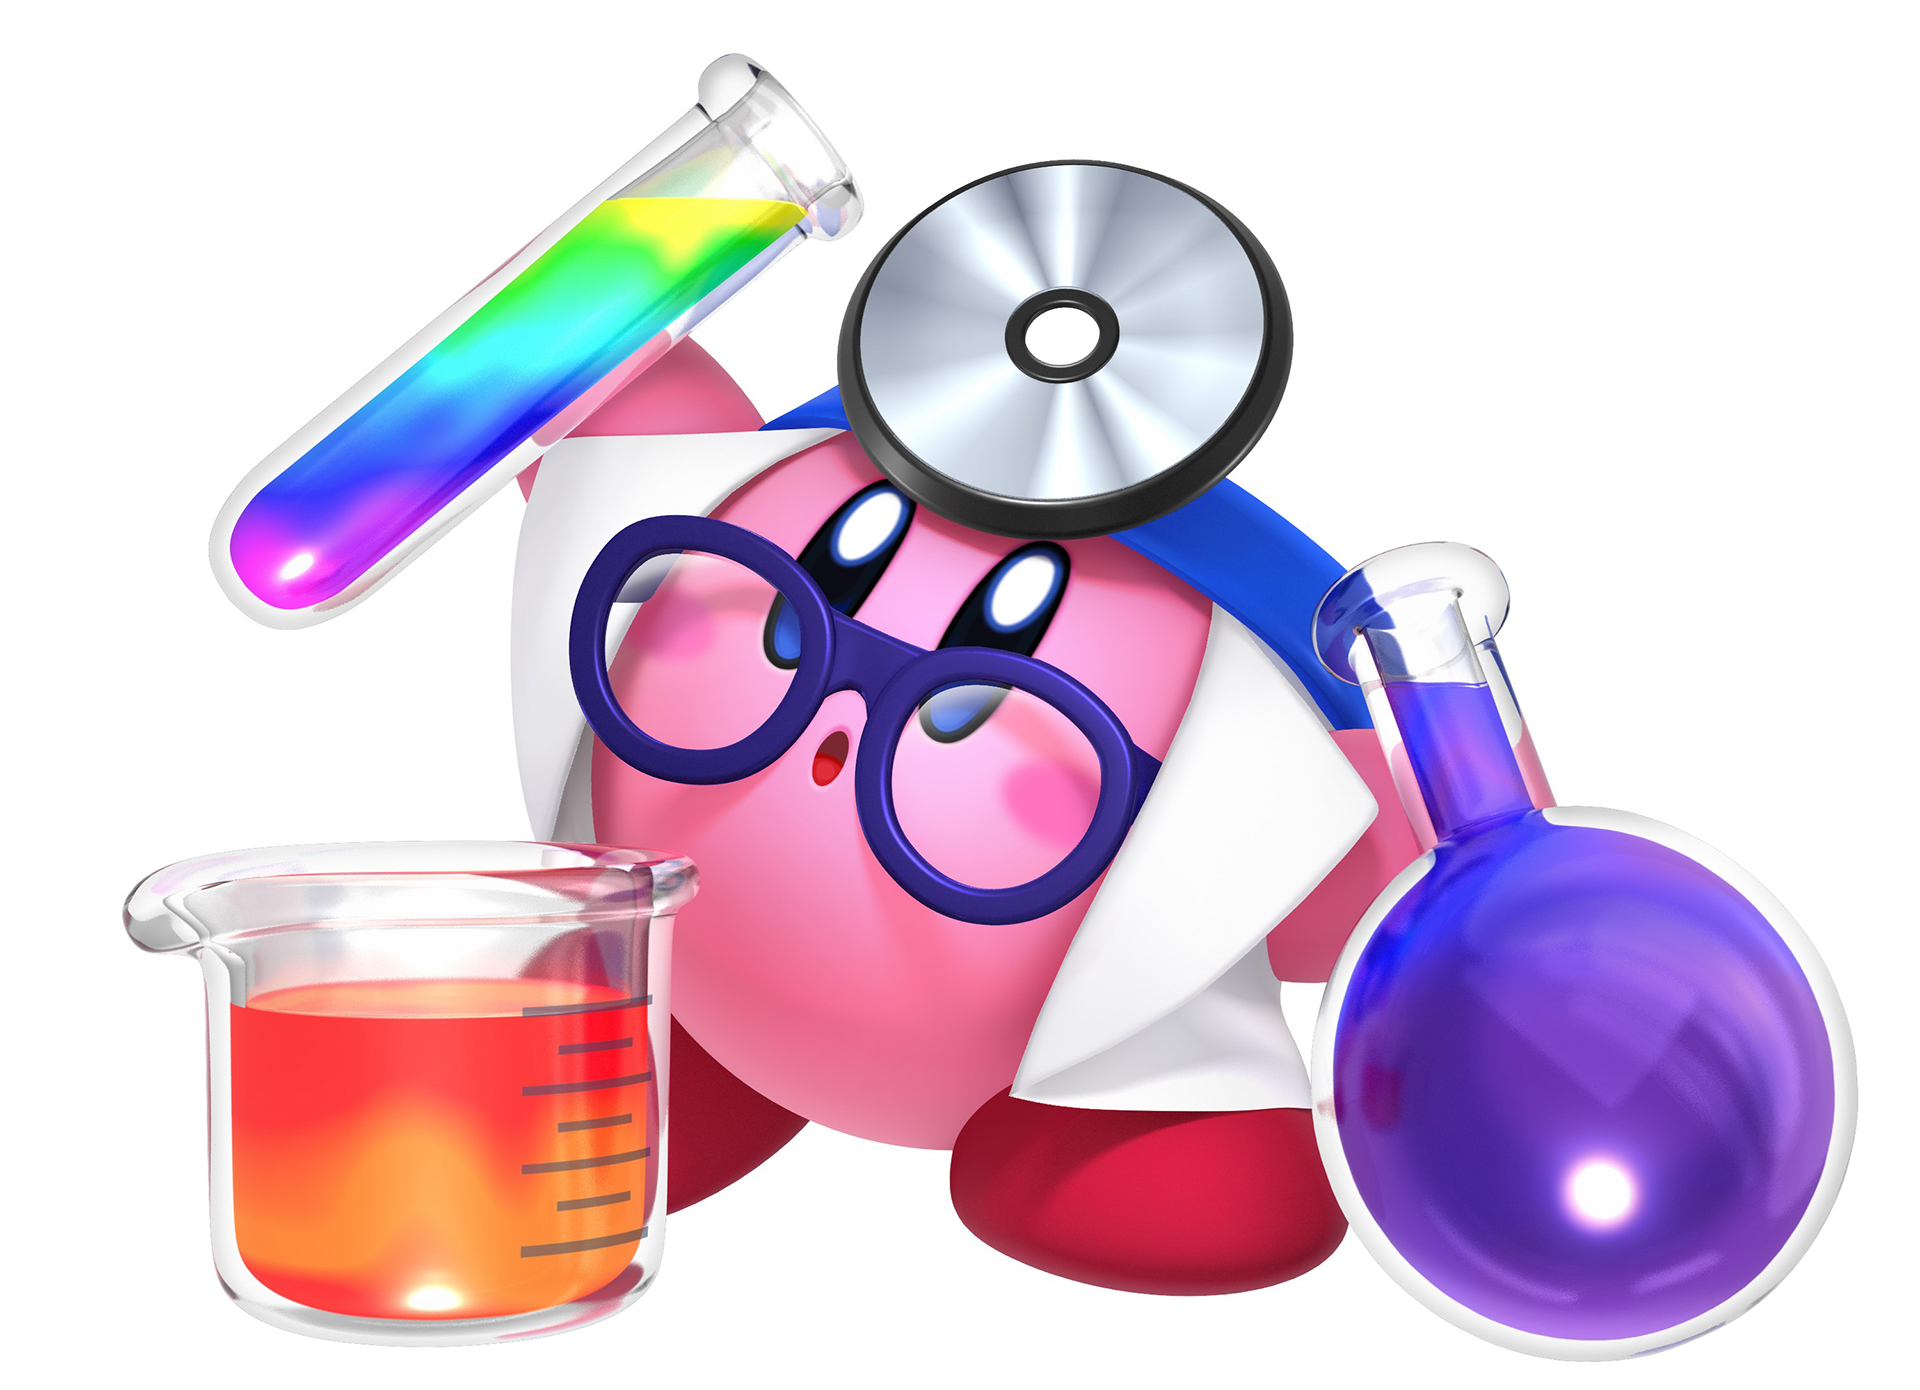 Kirby: Planet Robobot: The Kotaku Review